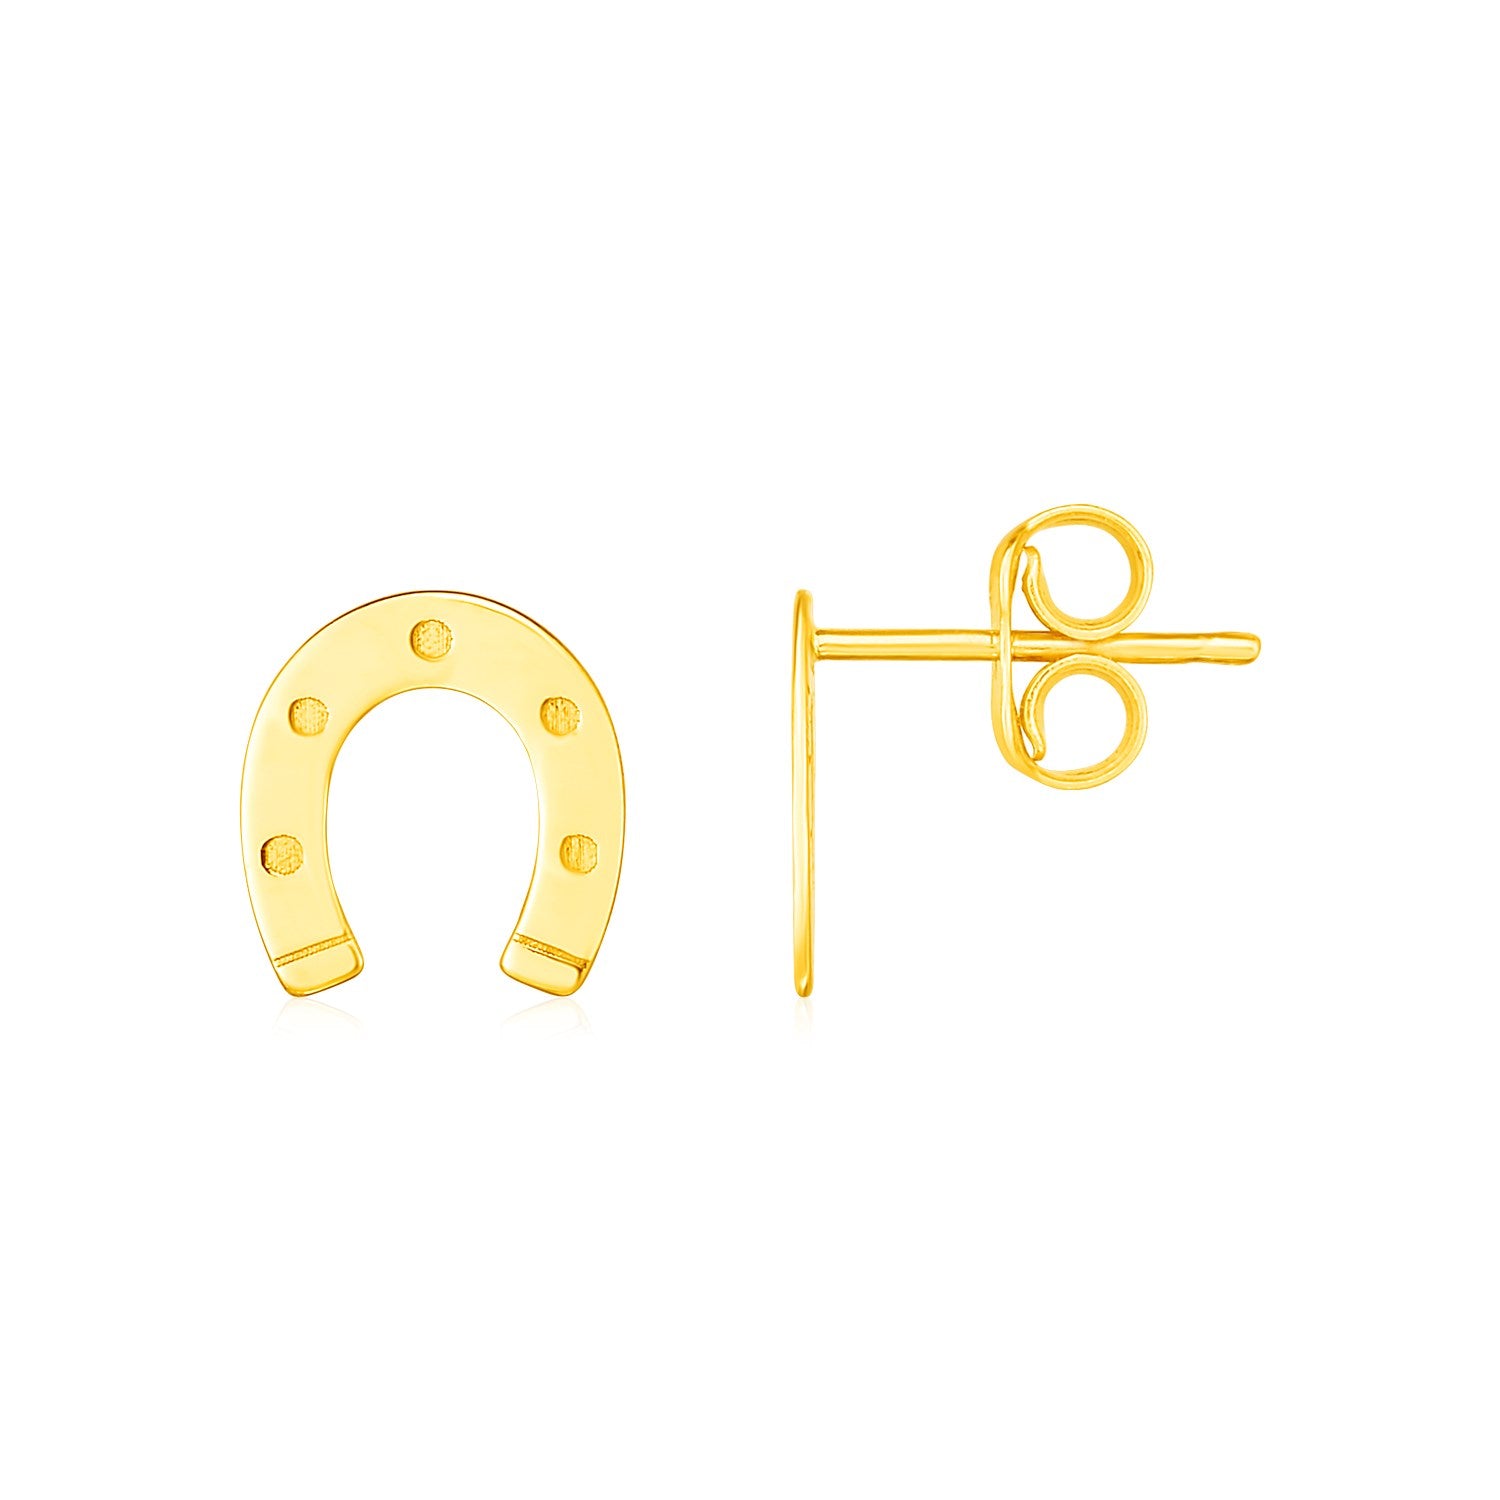 14K Yellow Gold Horseshoe Earrings